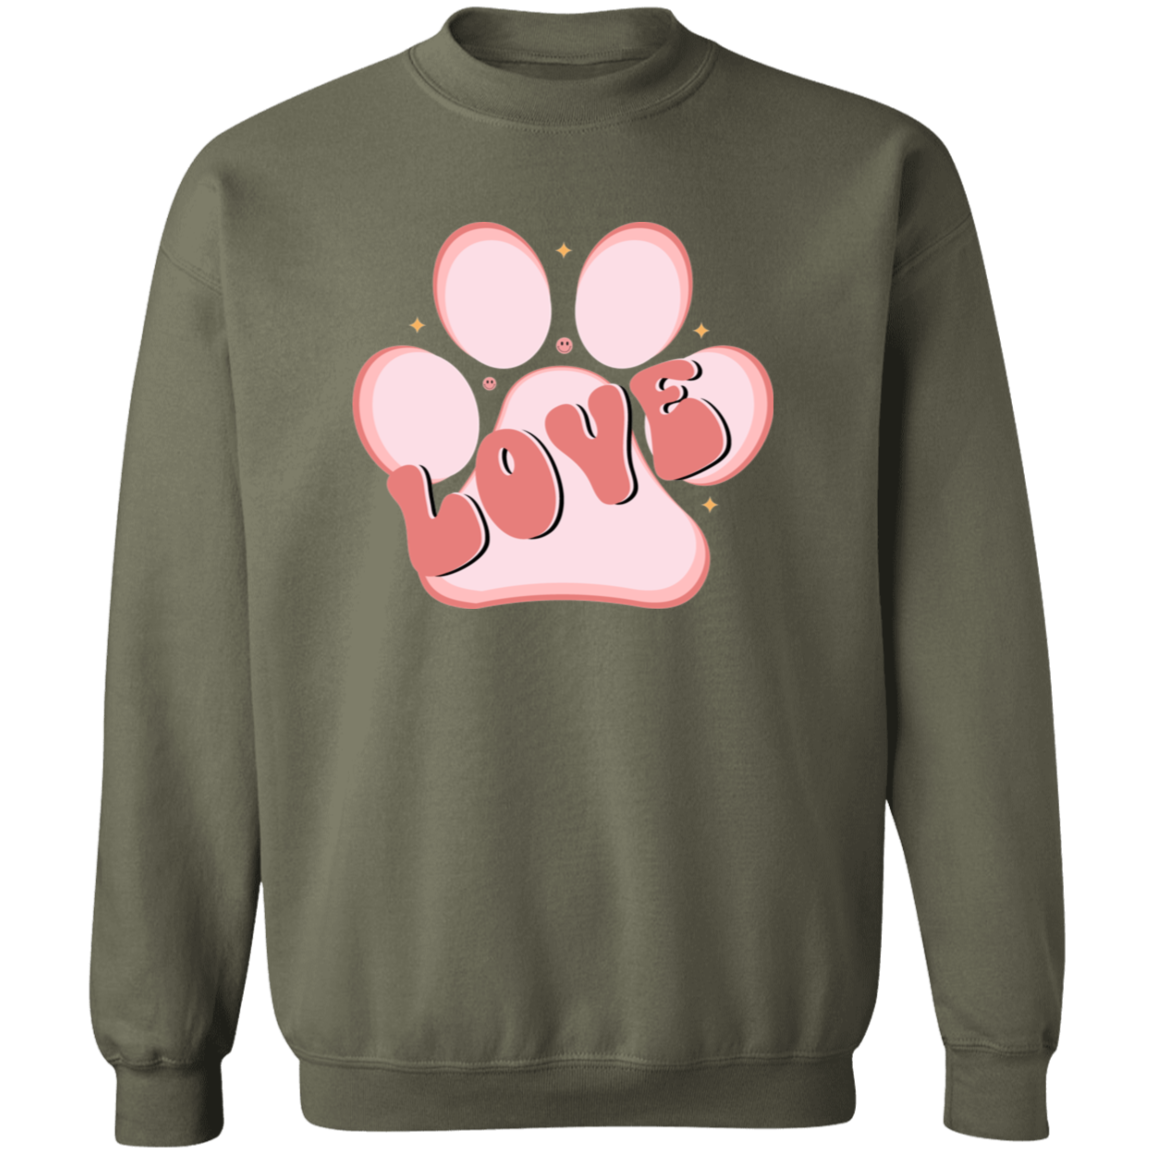 Love Paw Print Dog Rescue Crewneck Pullover Sweatshirt